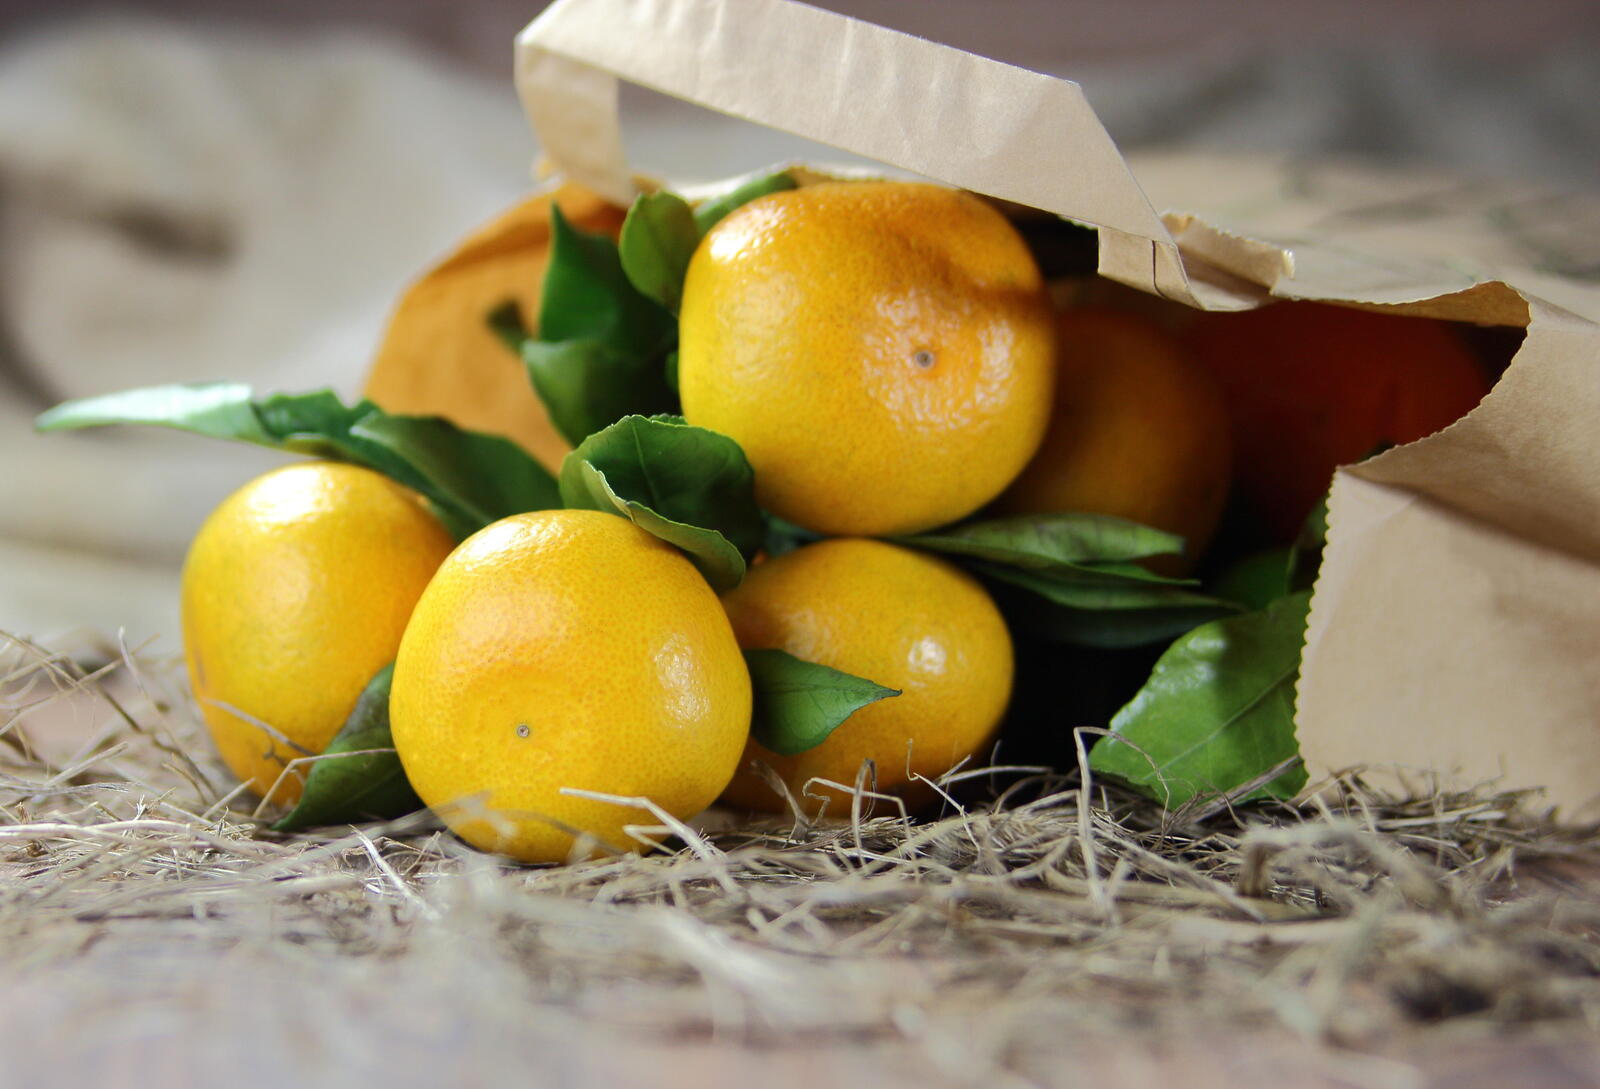 Wallpapers yellow tangerines citrus food on the desktop